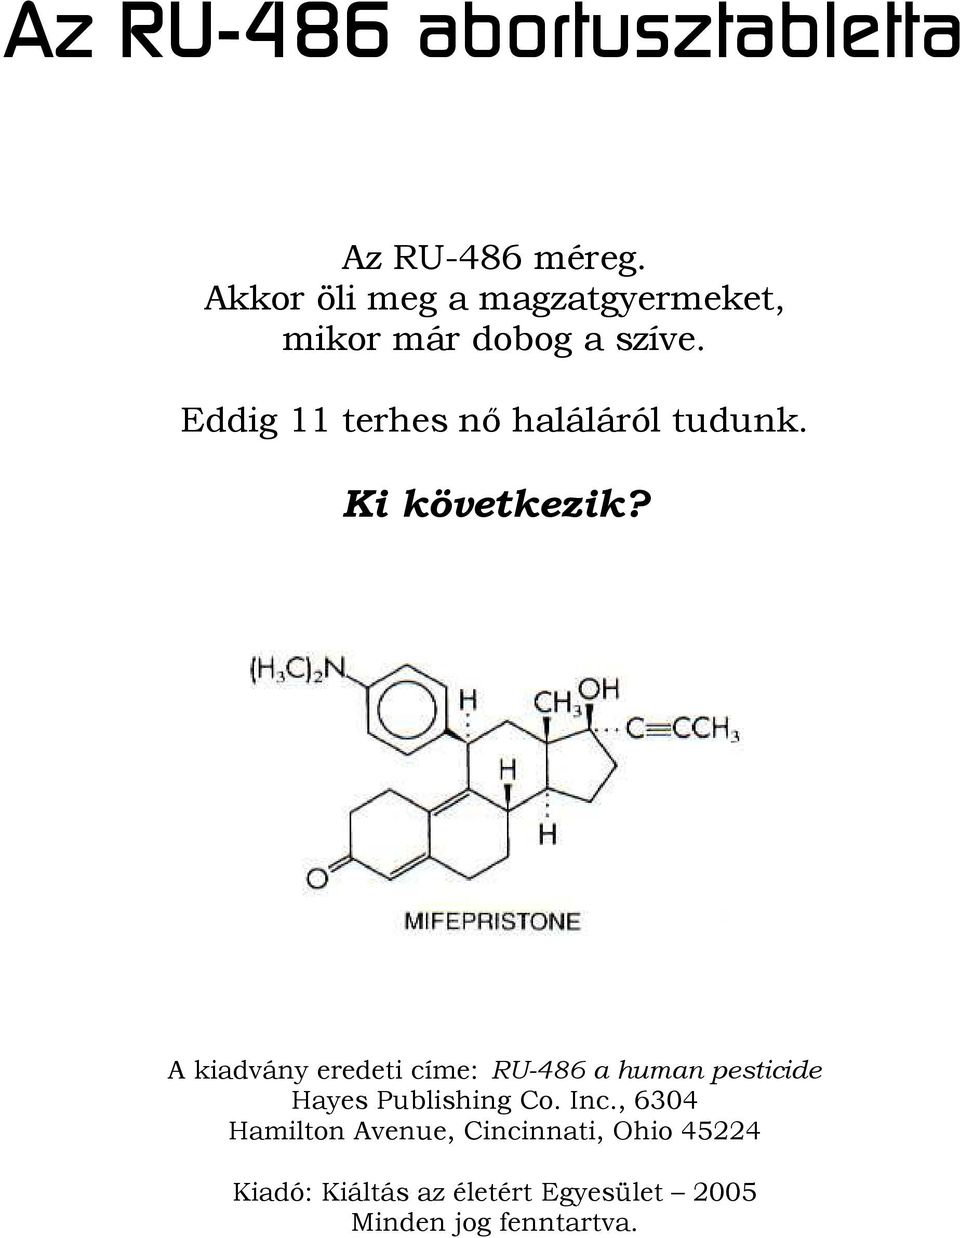 A kiadvány eredeti címe: RU-486 a human pesticide Hayes Publishing Co. Inc.